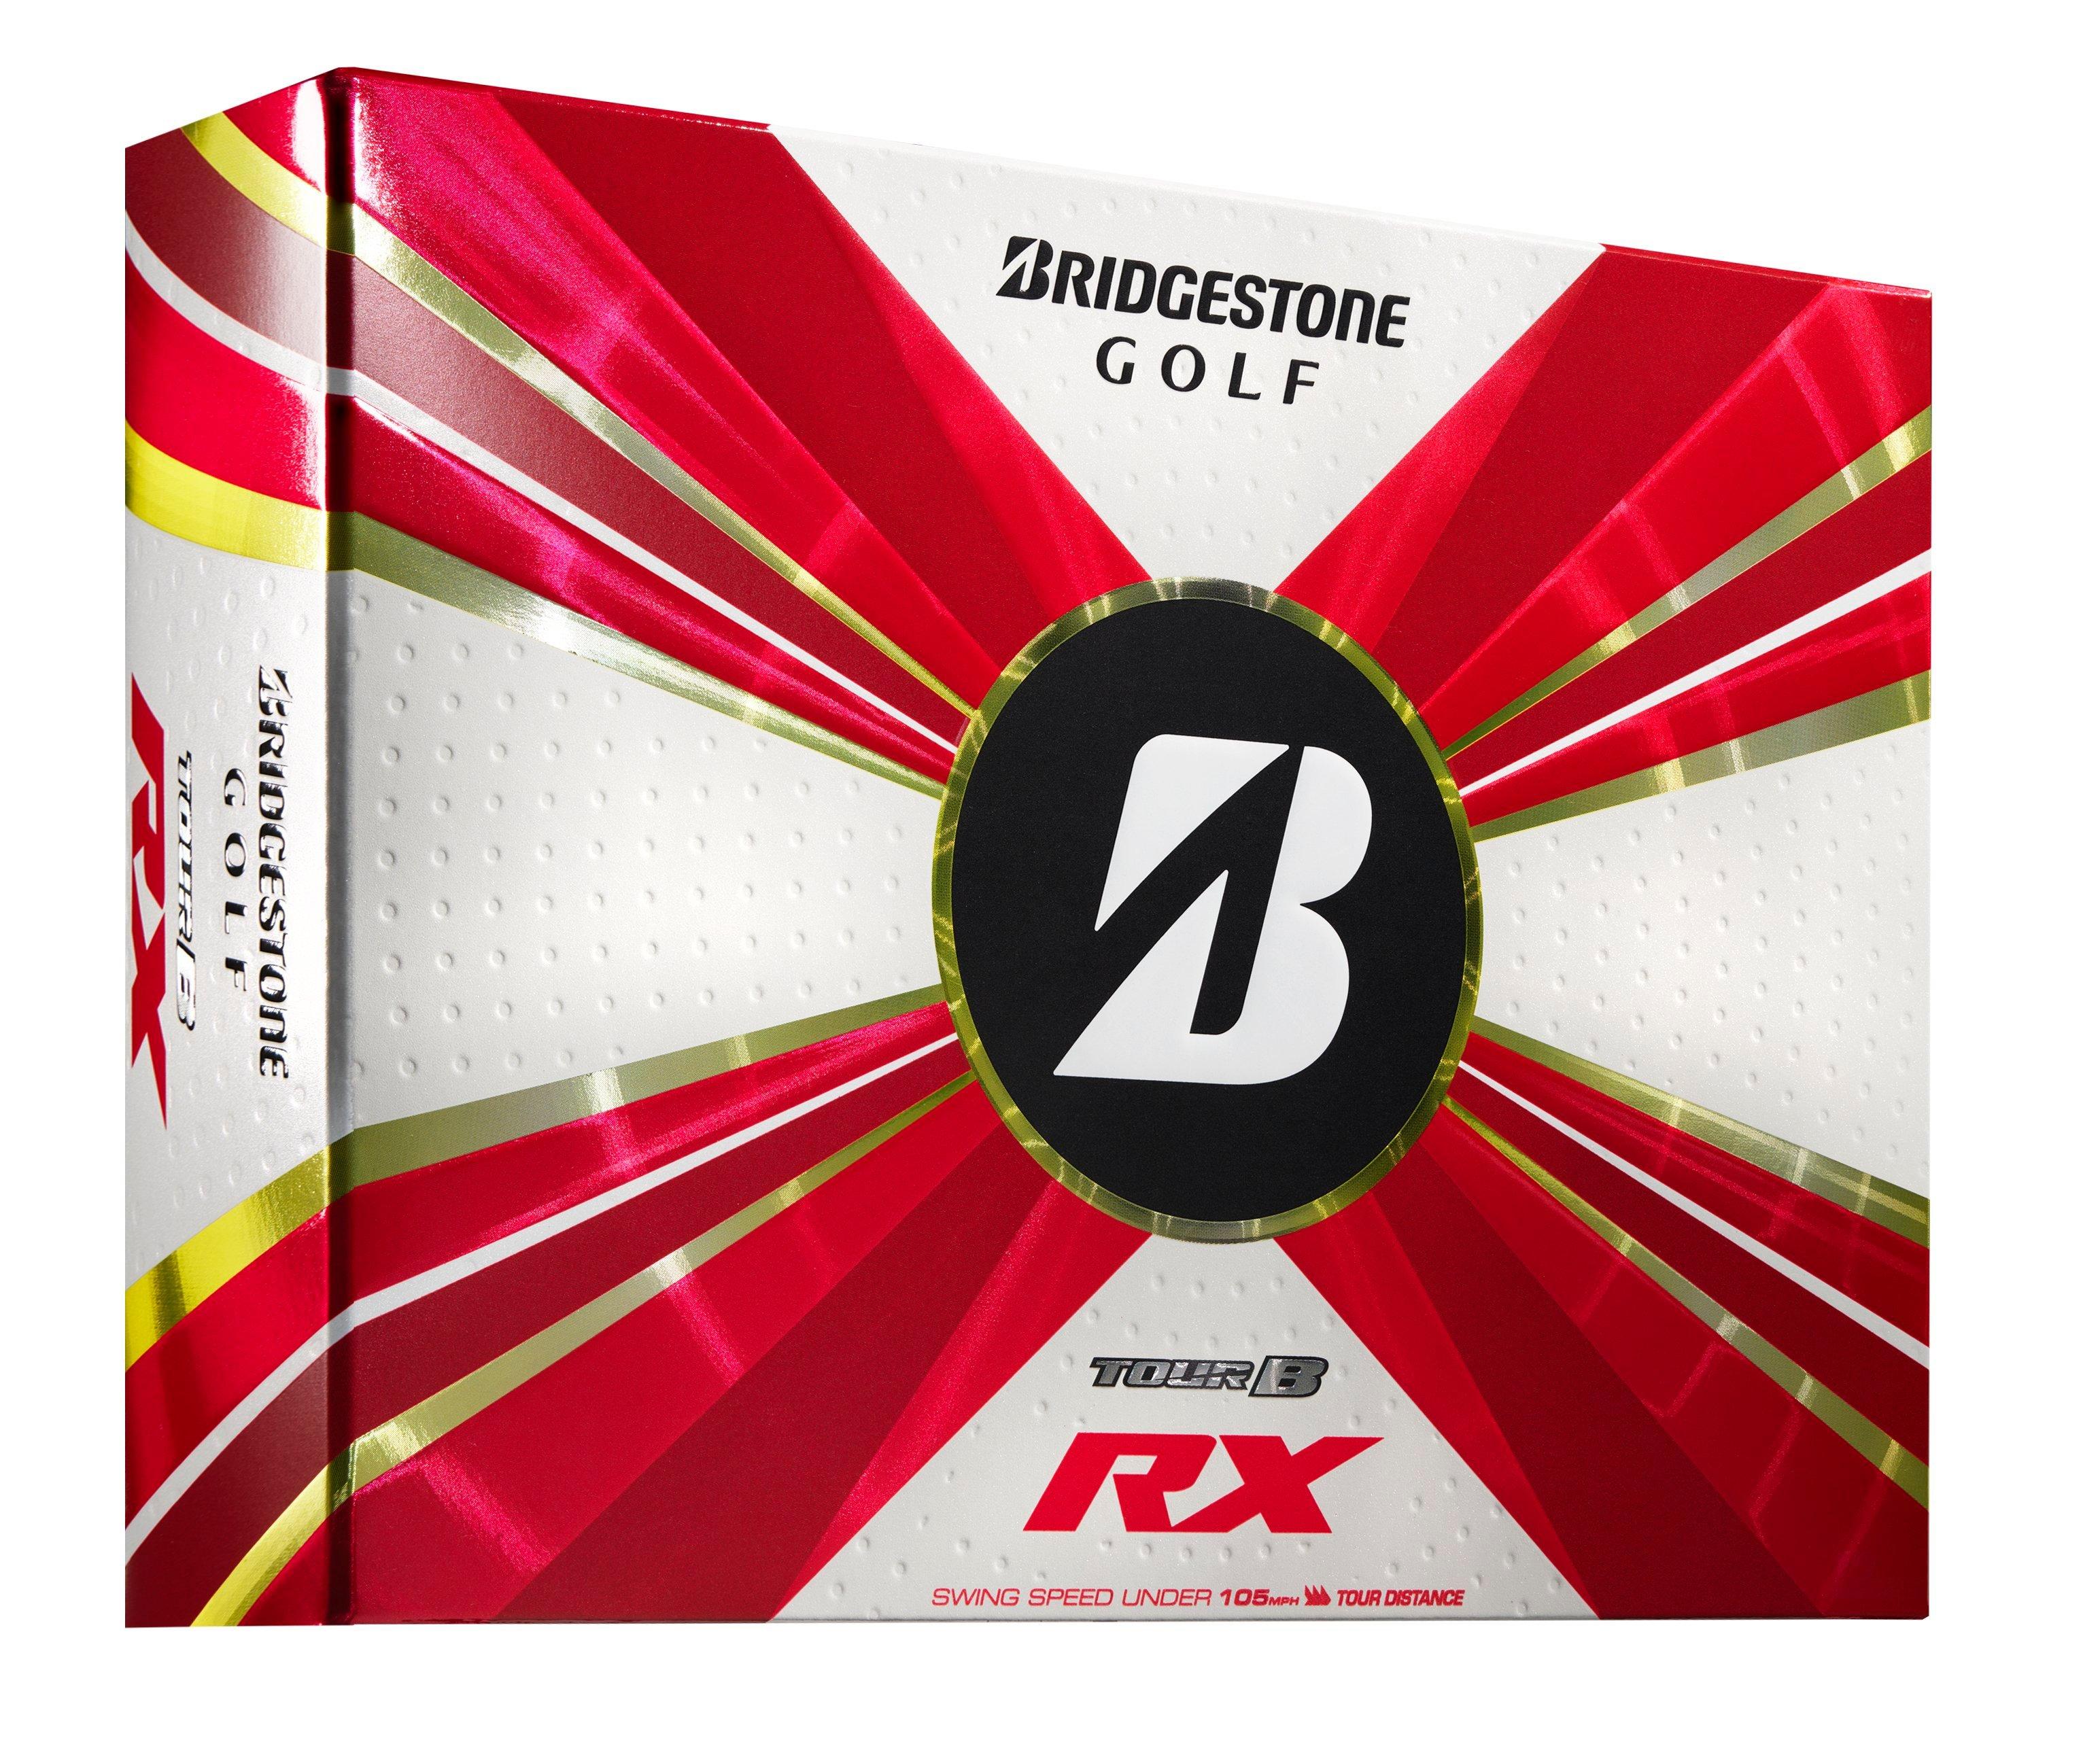 Prior Generation - Tour B RX Golf Balls | BRIDGESTONE | Golf Balls 